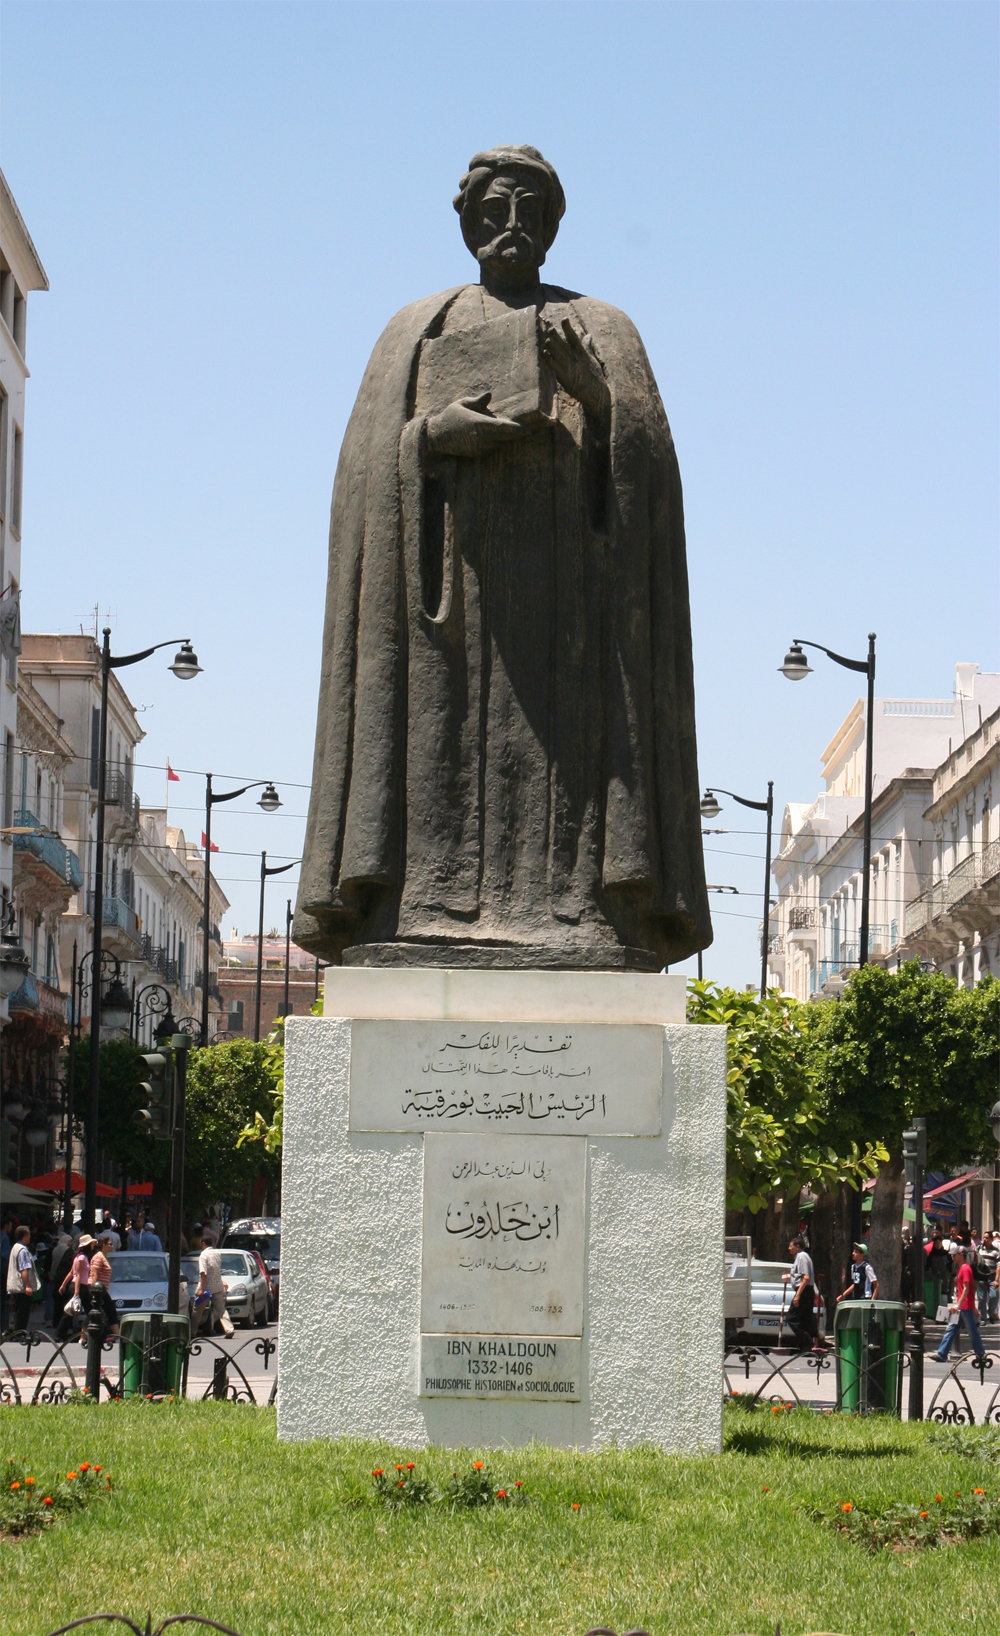 http://upload.wikimedia.org/wikipedia/commons/b/b2/Ibn_Khaldoun-Kassus.jpg